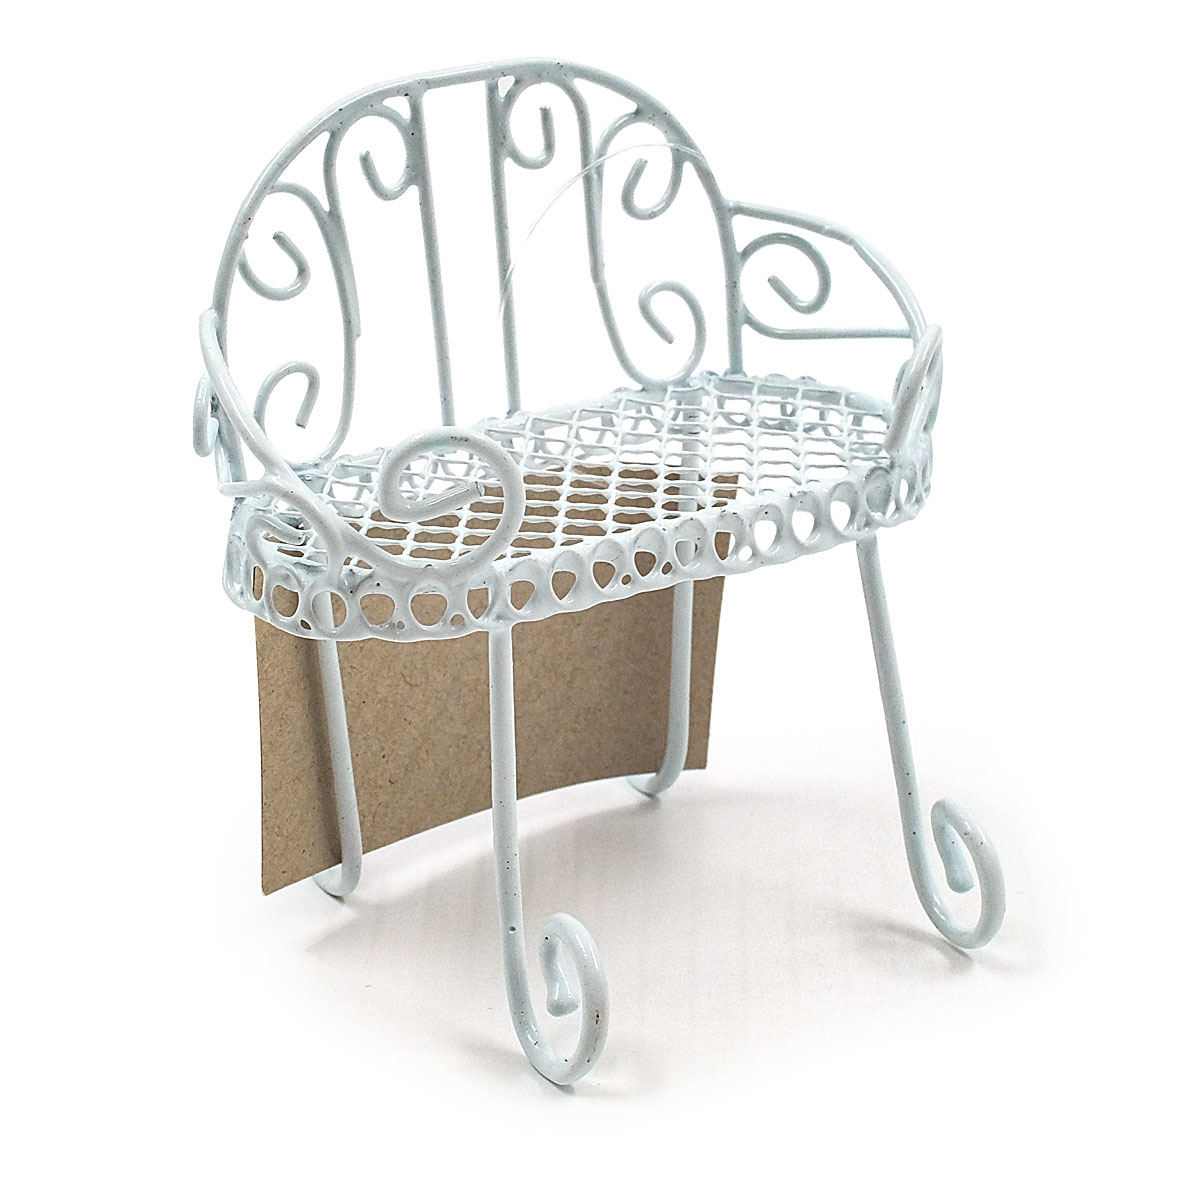 Мебель для куклы Астра металлический мини стул, белый KB3135 мебель для куклы scrapberry s металлический мини балкончик коричневый